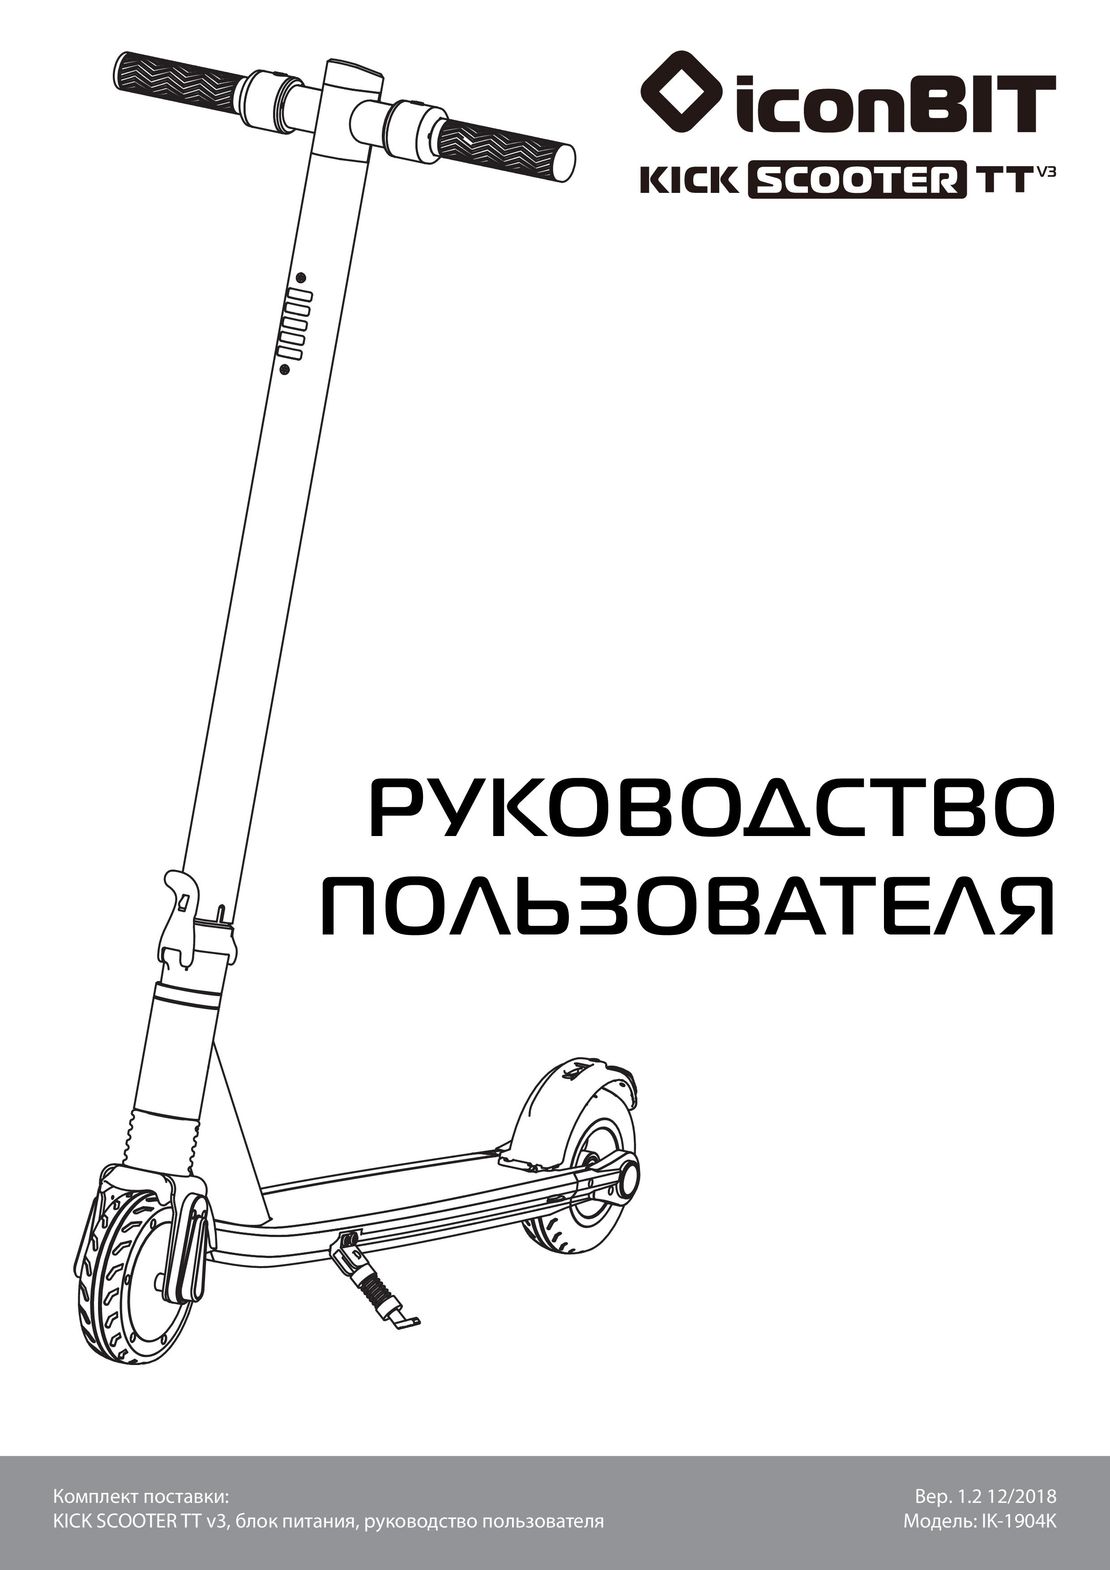 iconBIT Kick Scooter TT инструкция на русском